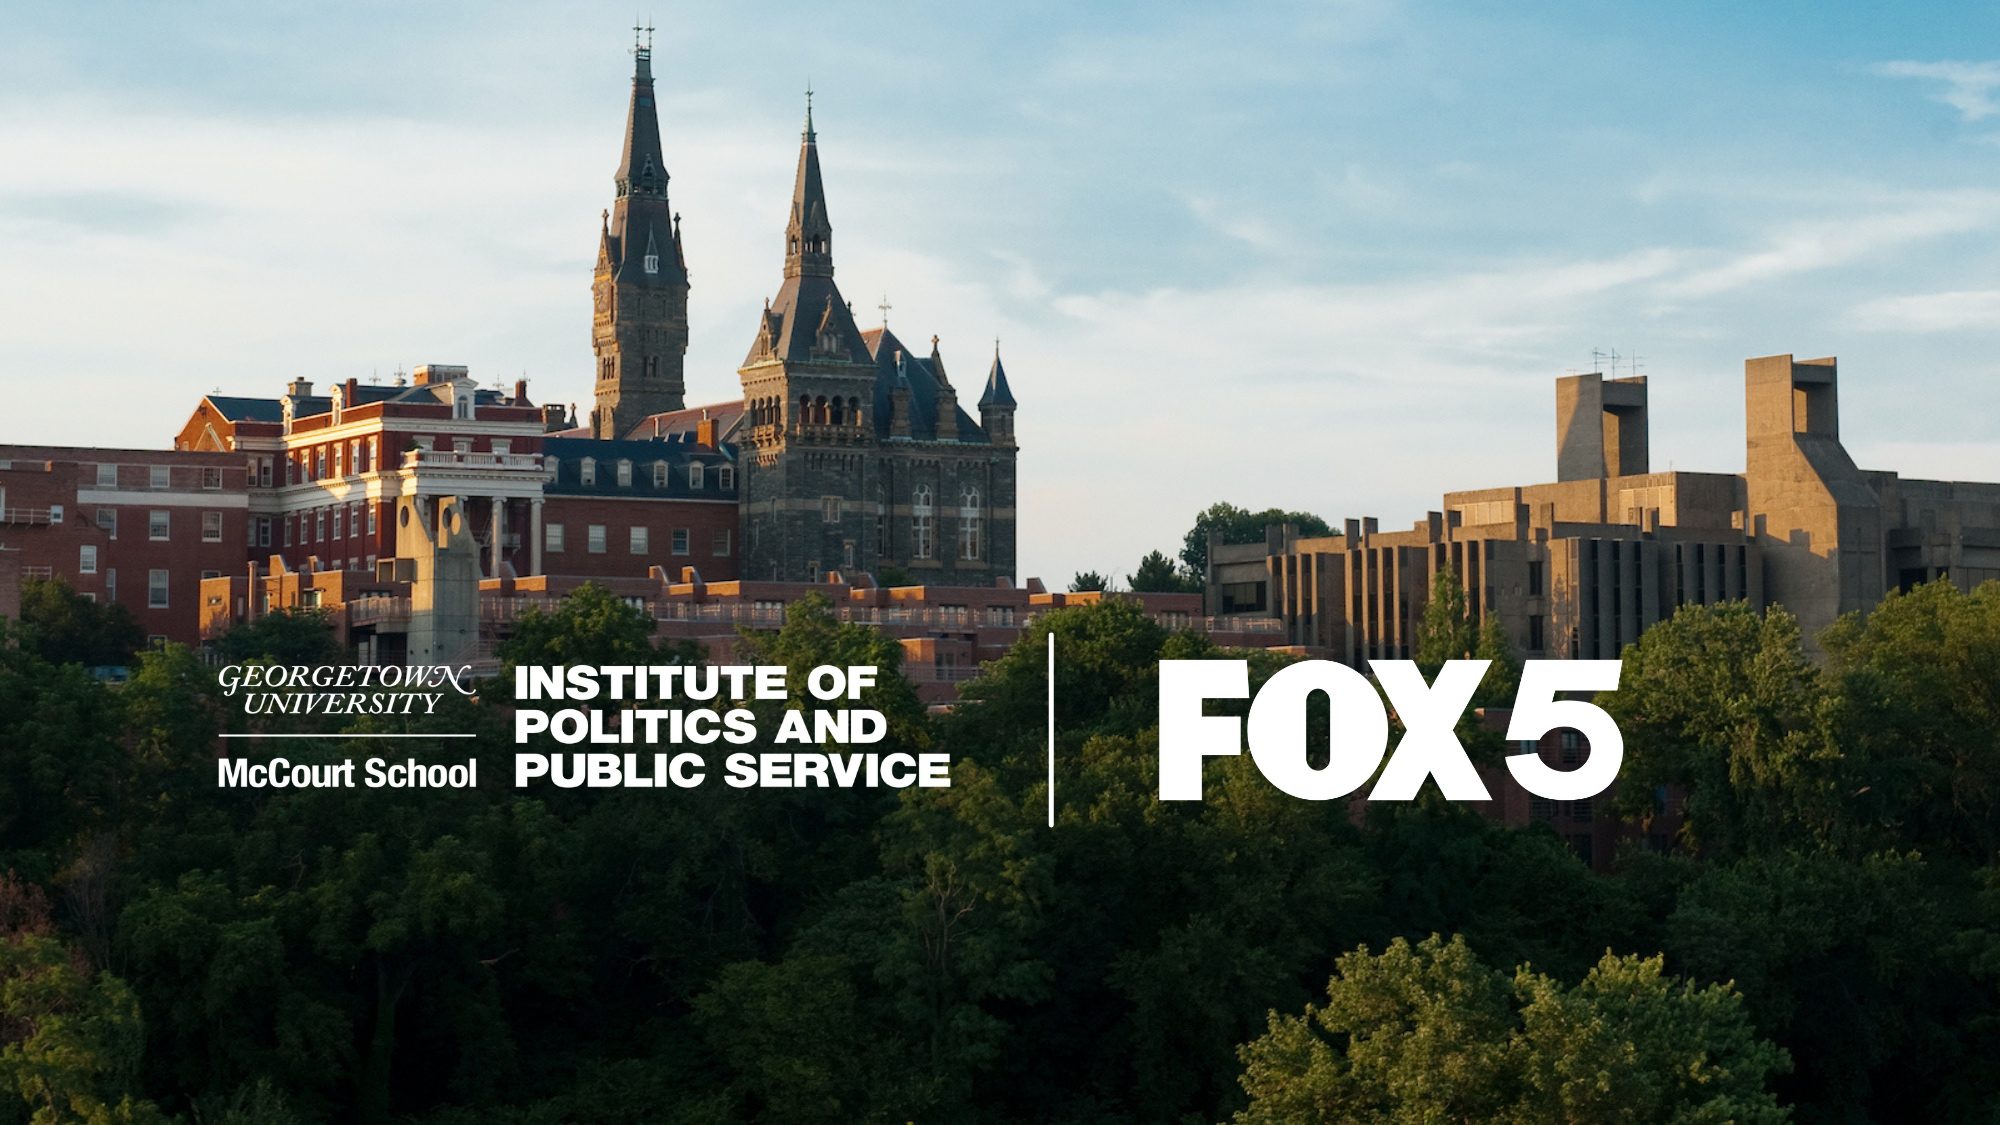 Image of Georgetown skyline with GU Politics & FOX 5 logos centered on top